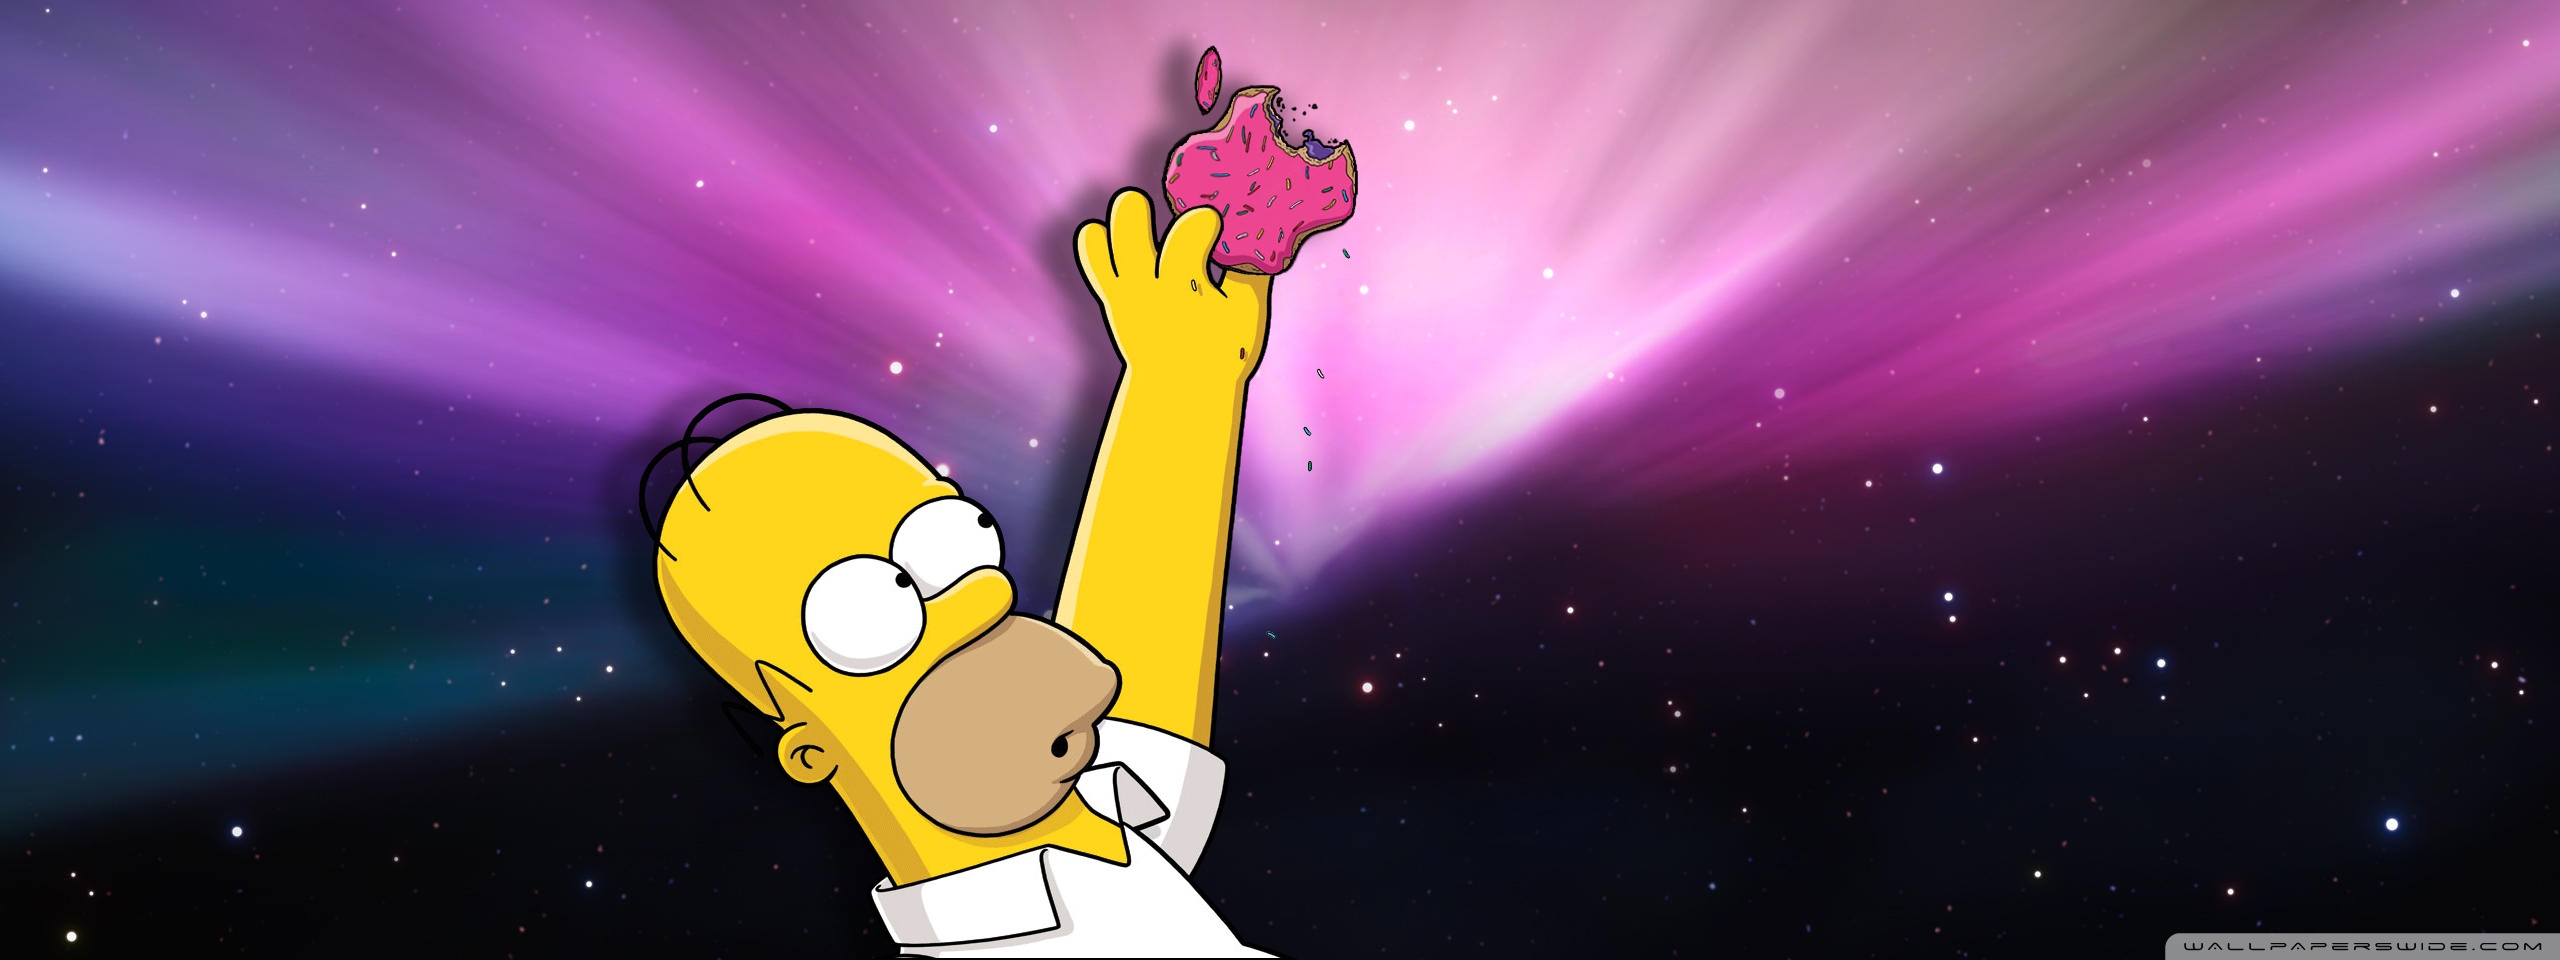 Homer Simpson Holding Donut - HD Wallpaper 